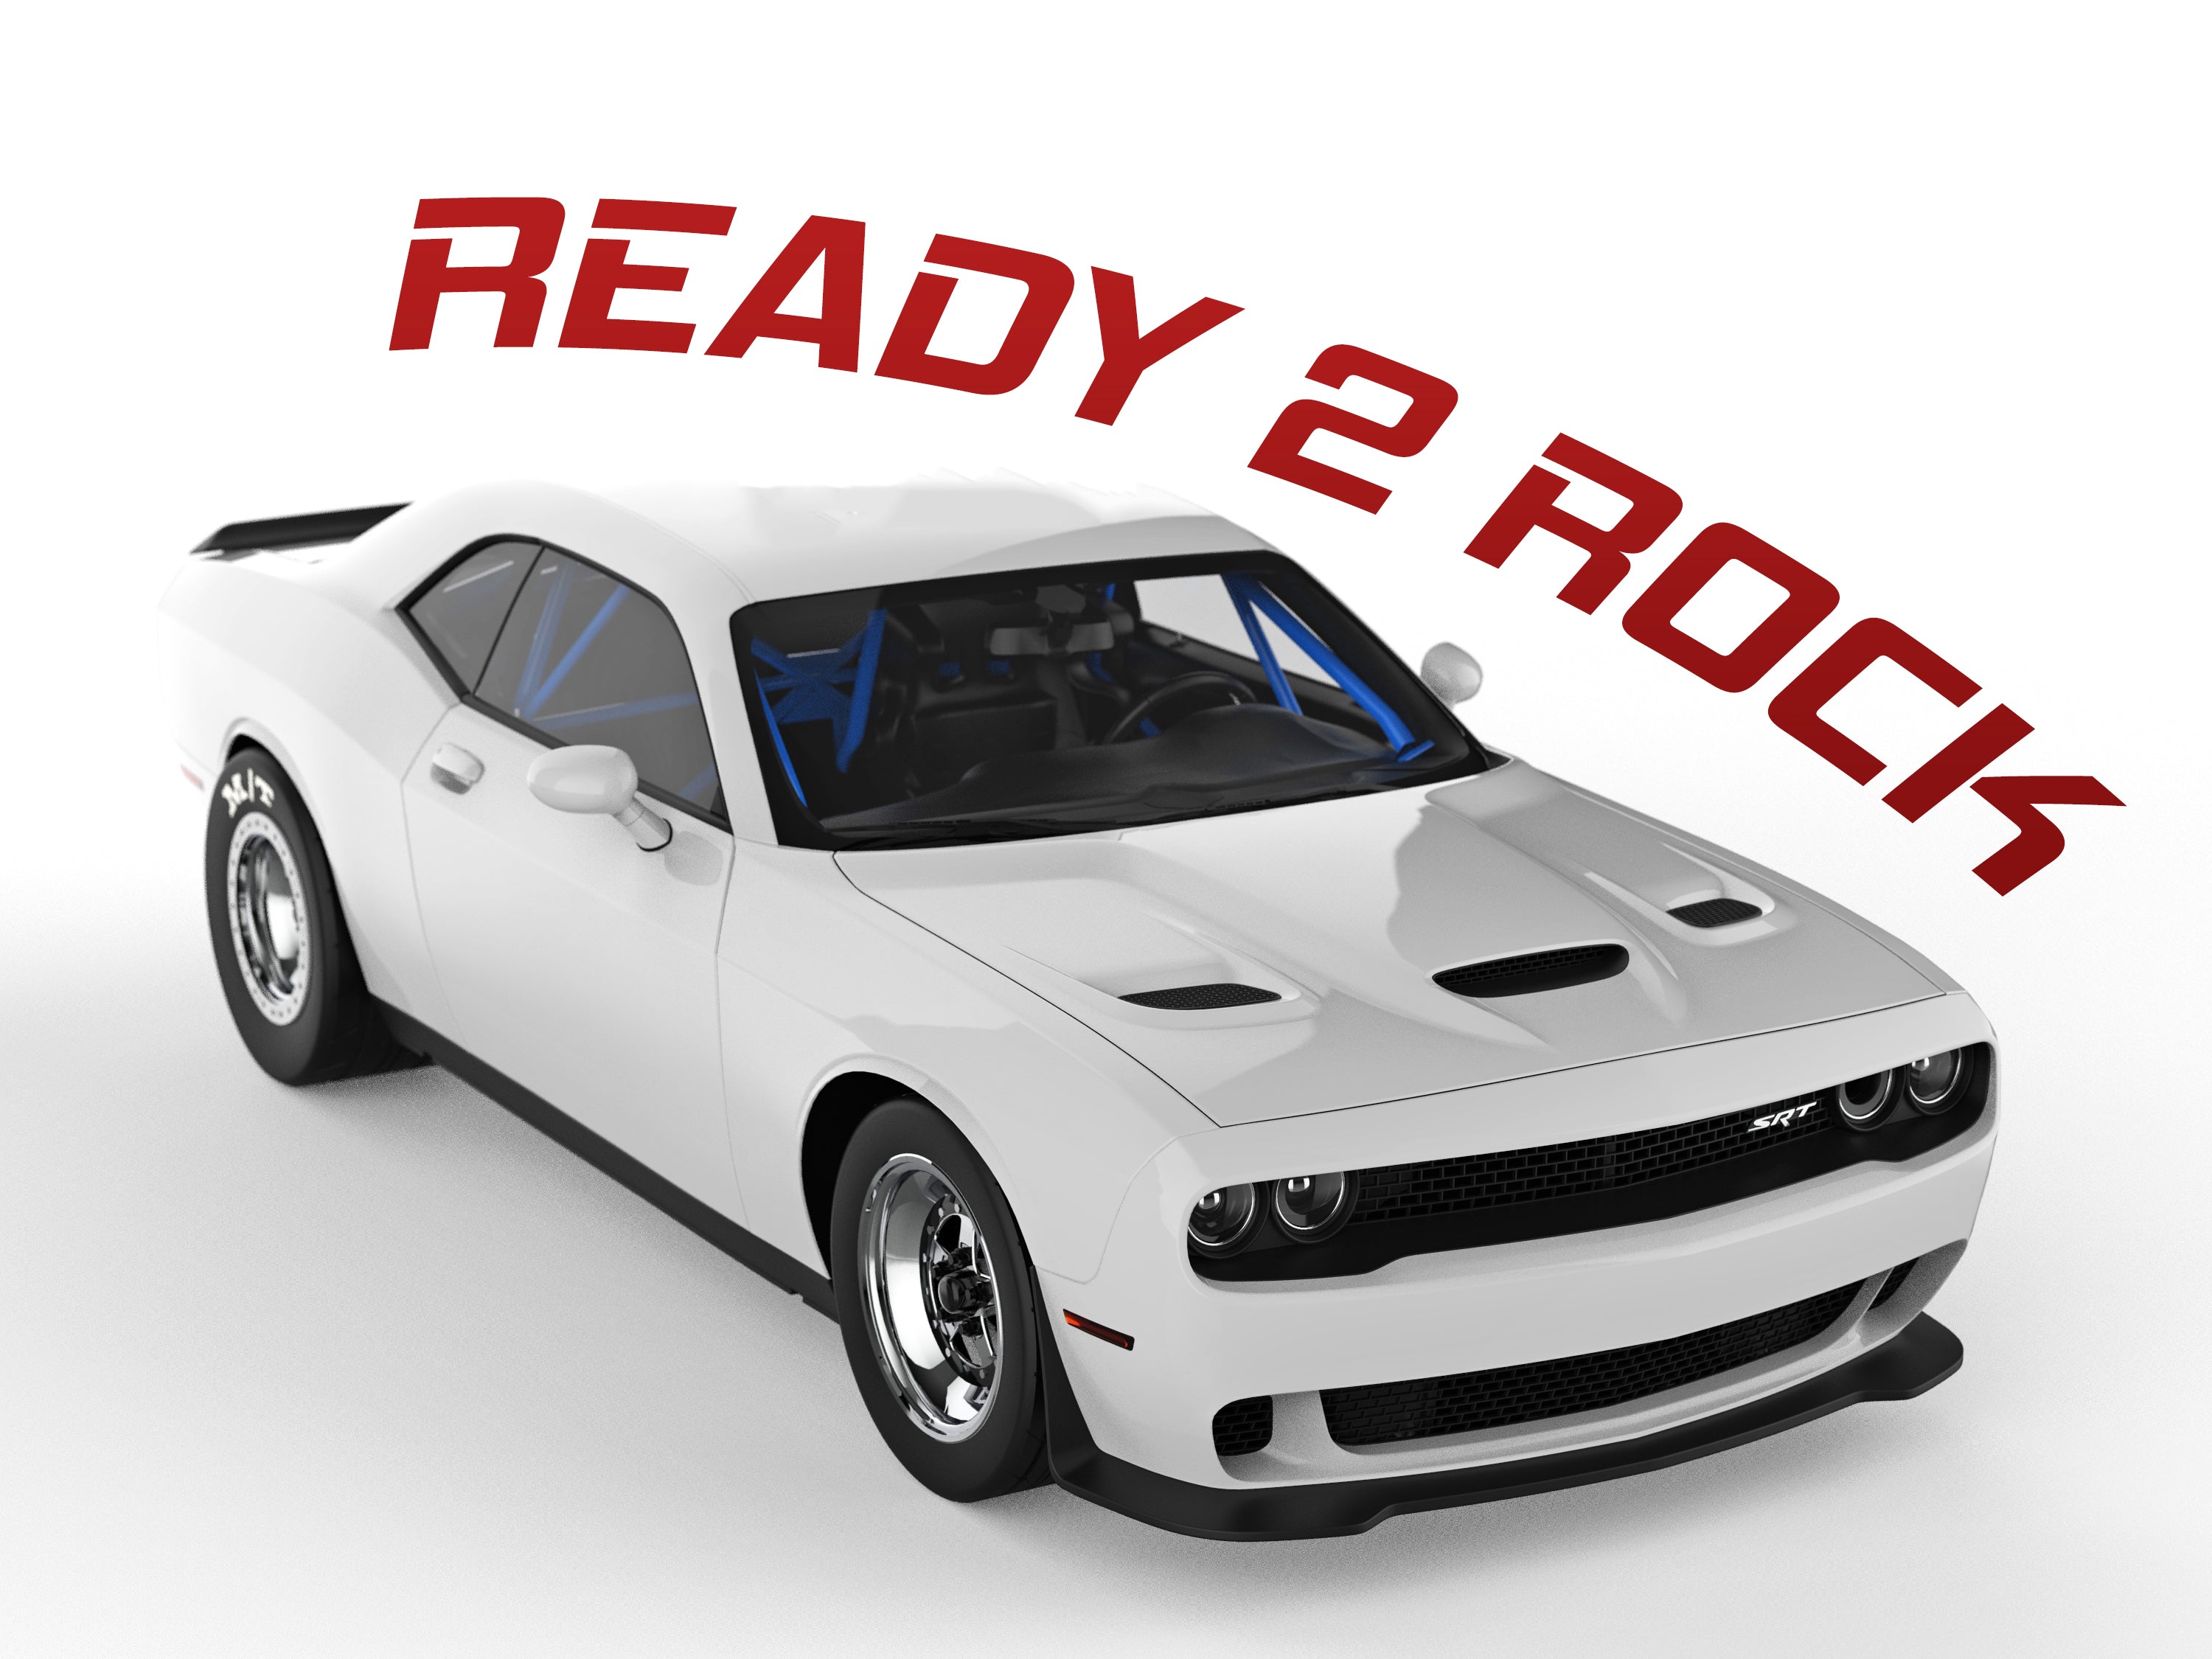 Ready2Rock Promo